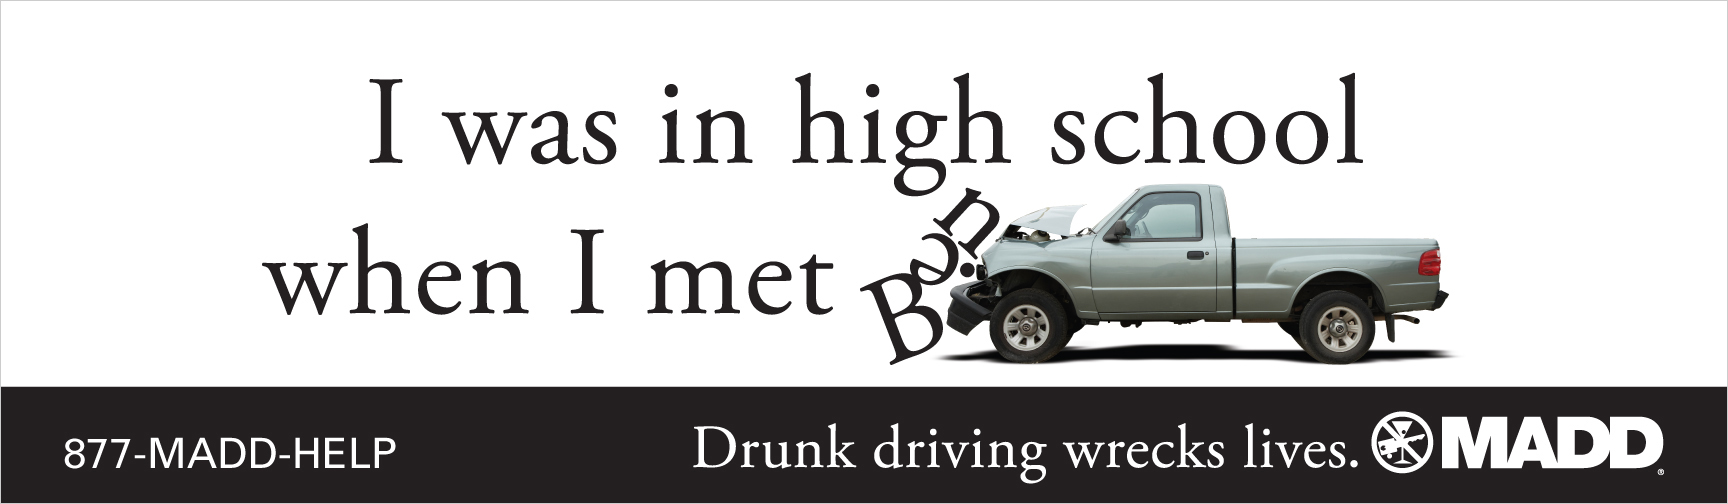 madd drunk driving ads